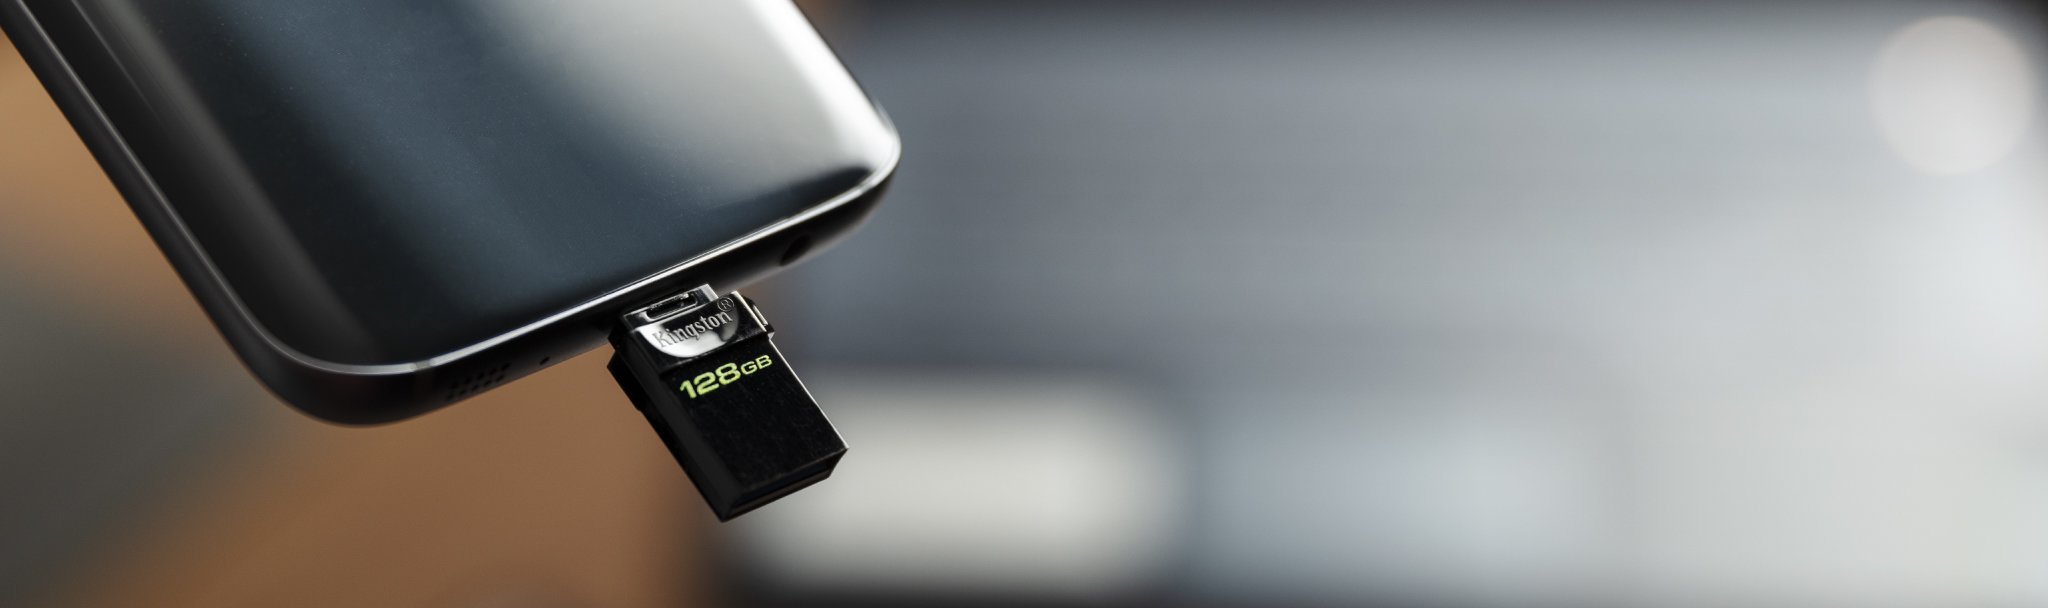 USB-накопитель DataTraveler microDuo 3.0 G2 — Kingston Technology